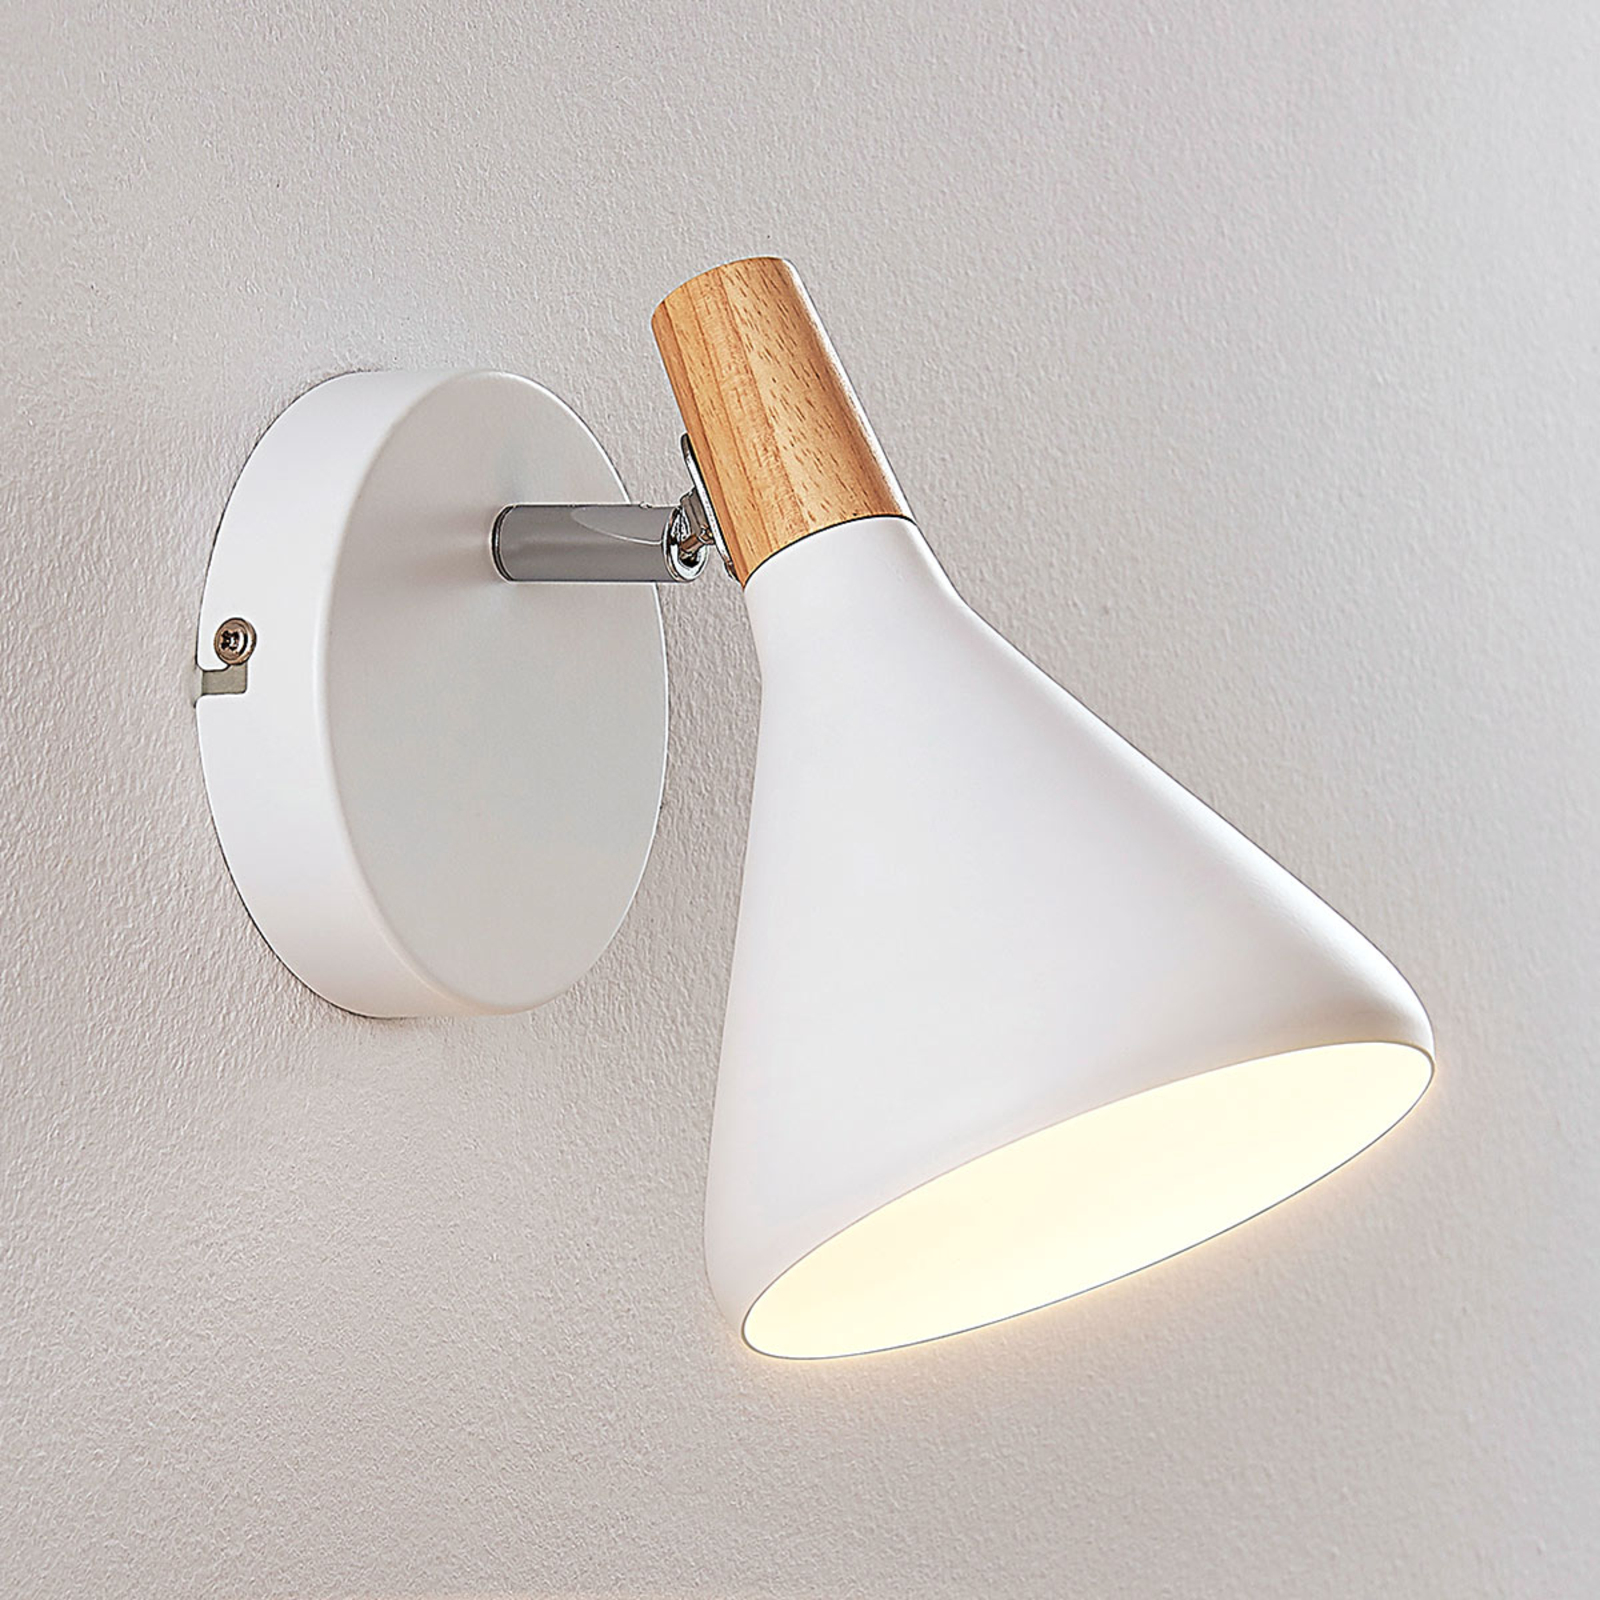 Arina wall light in white, 1-bulb